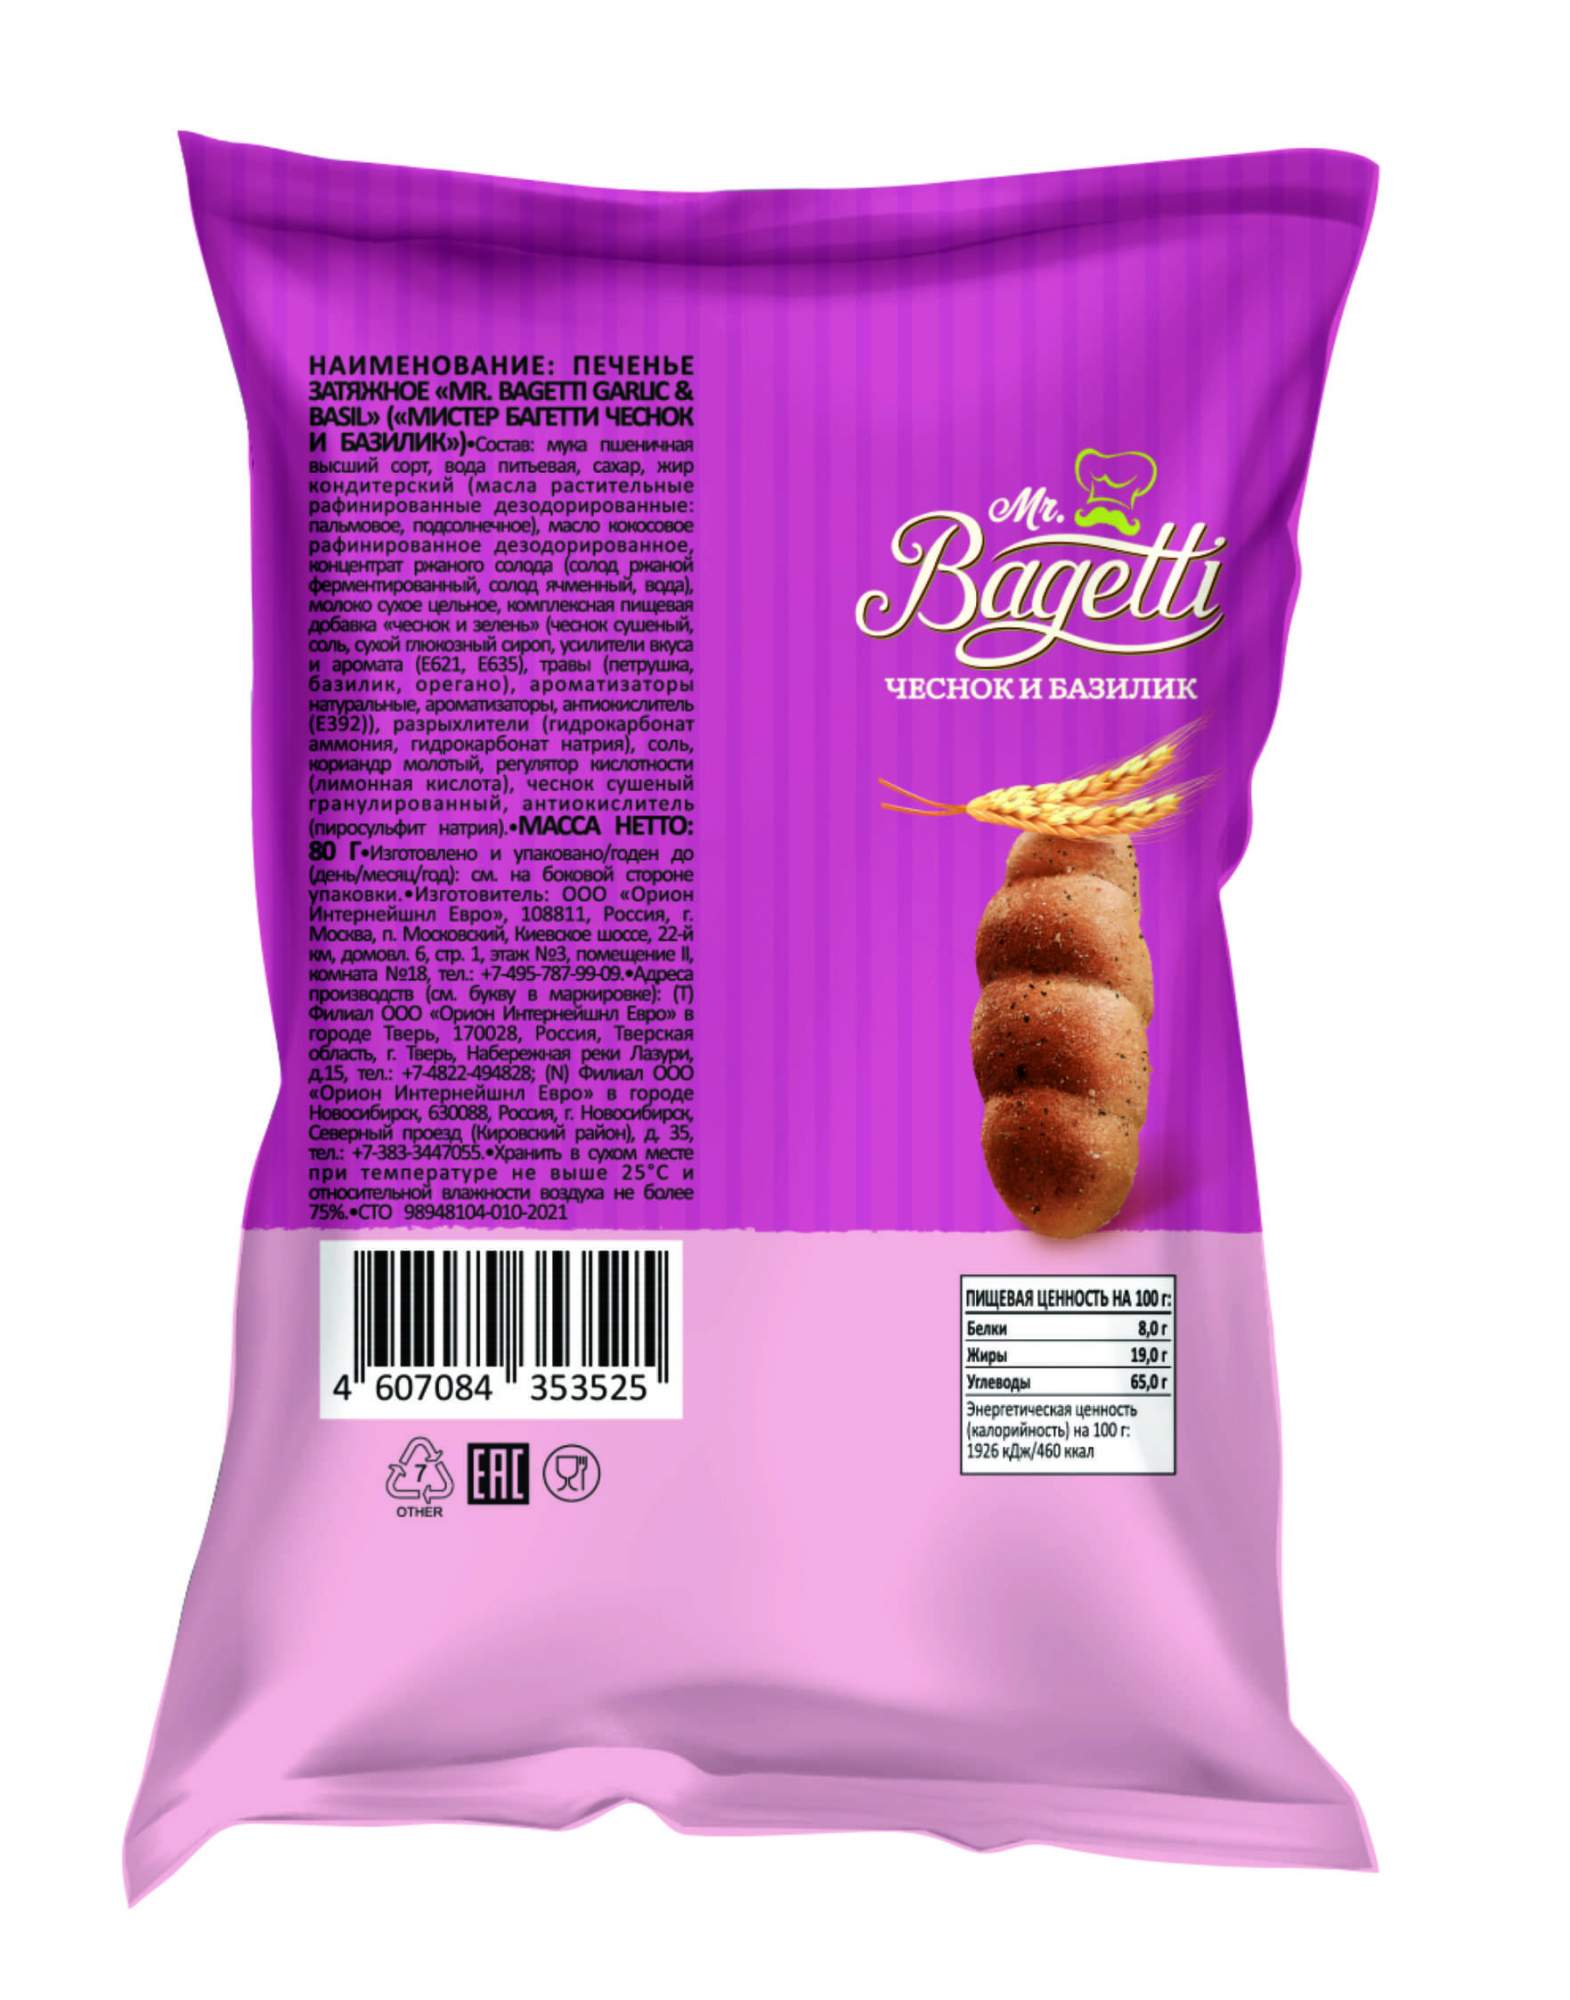 Печенье Orion Mr. Bagetti, чеснок и базилик, 80 г - отзывы покупателей намаркетплейсе Мегамаркет